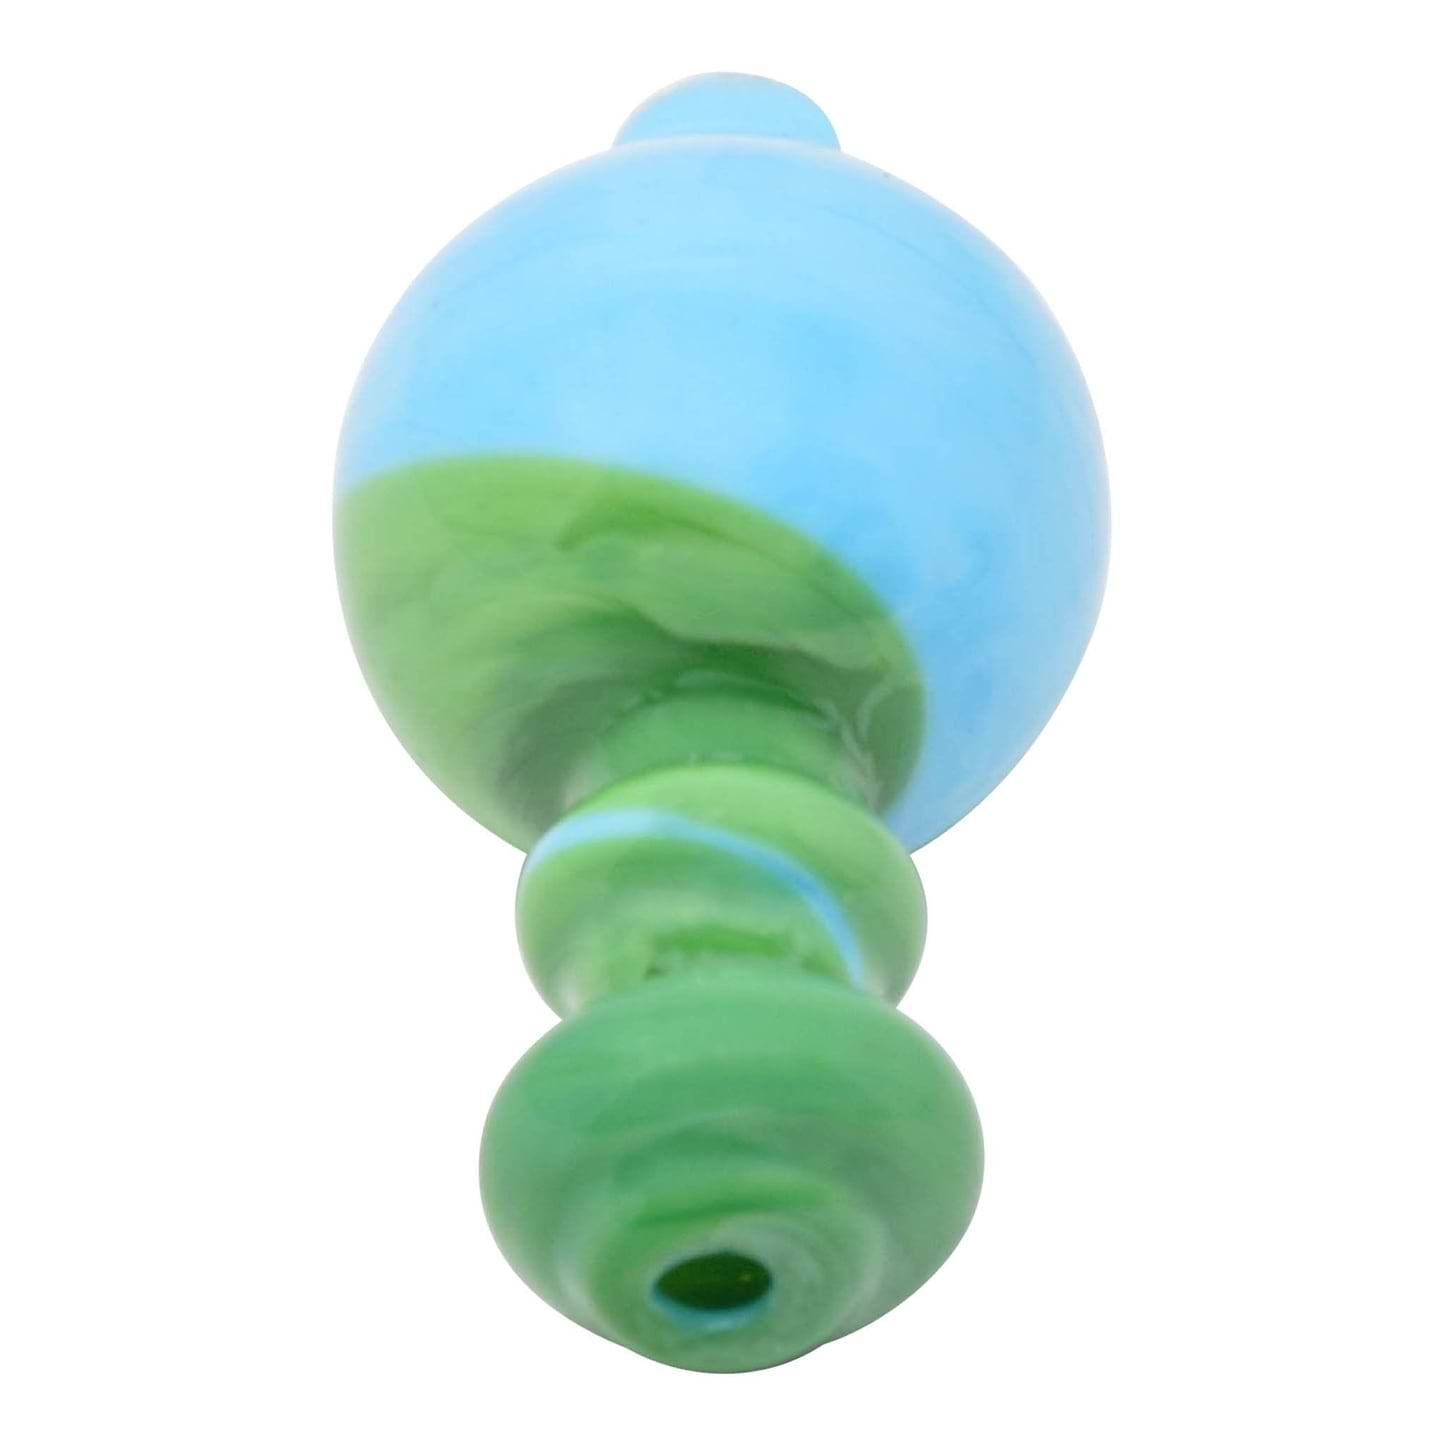 Twirled Carb Cap - 2.5in Aqua and Green